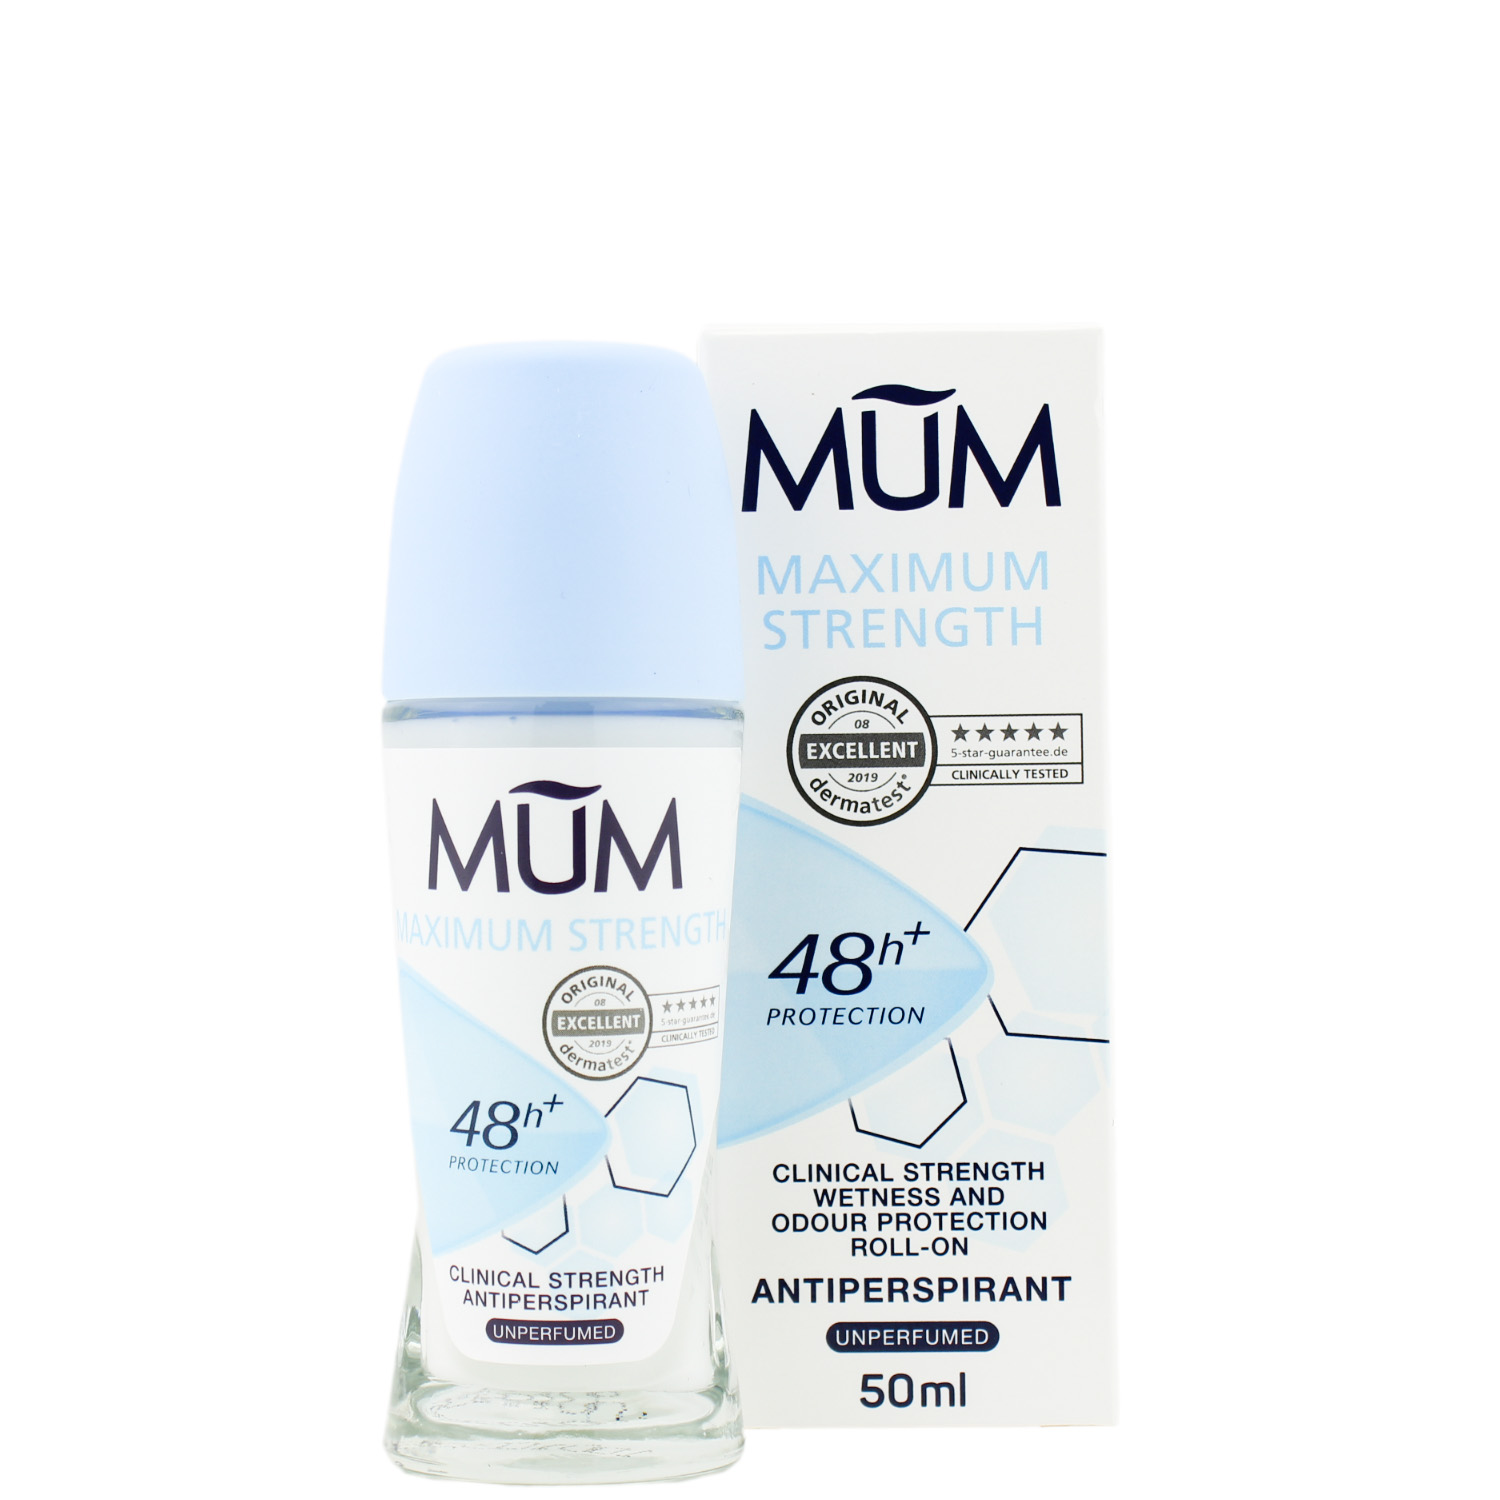 Mum Maximum Strength 48h+ Antitranspirant Deodorant Roll-On 50ml